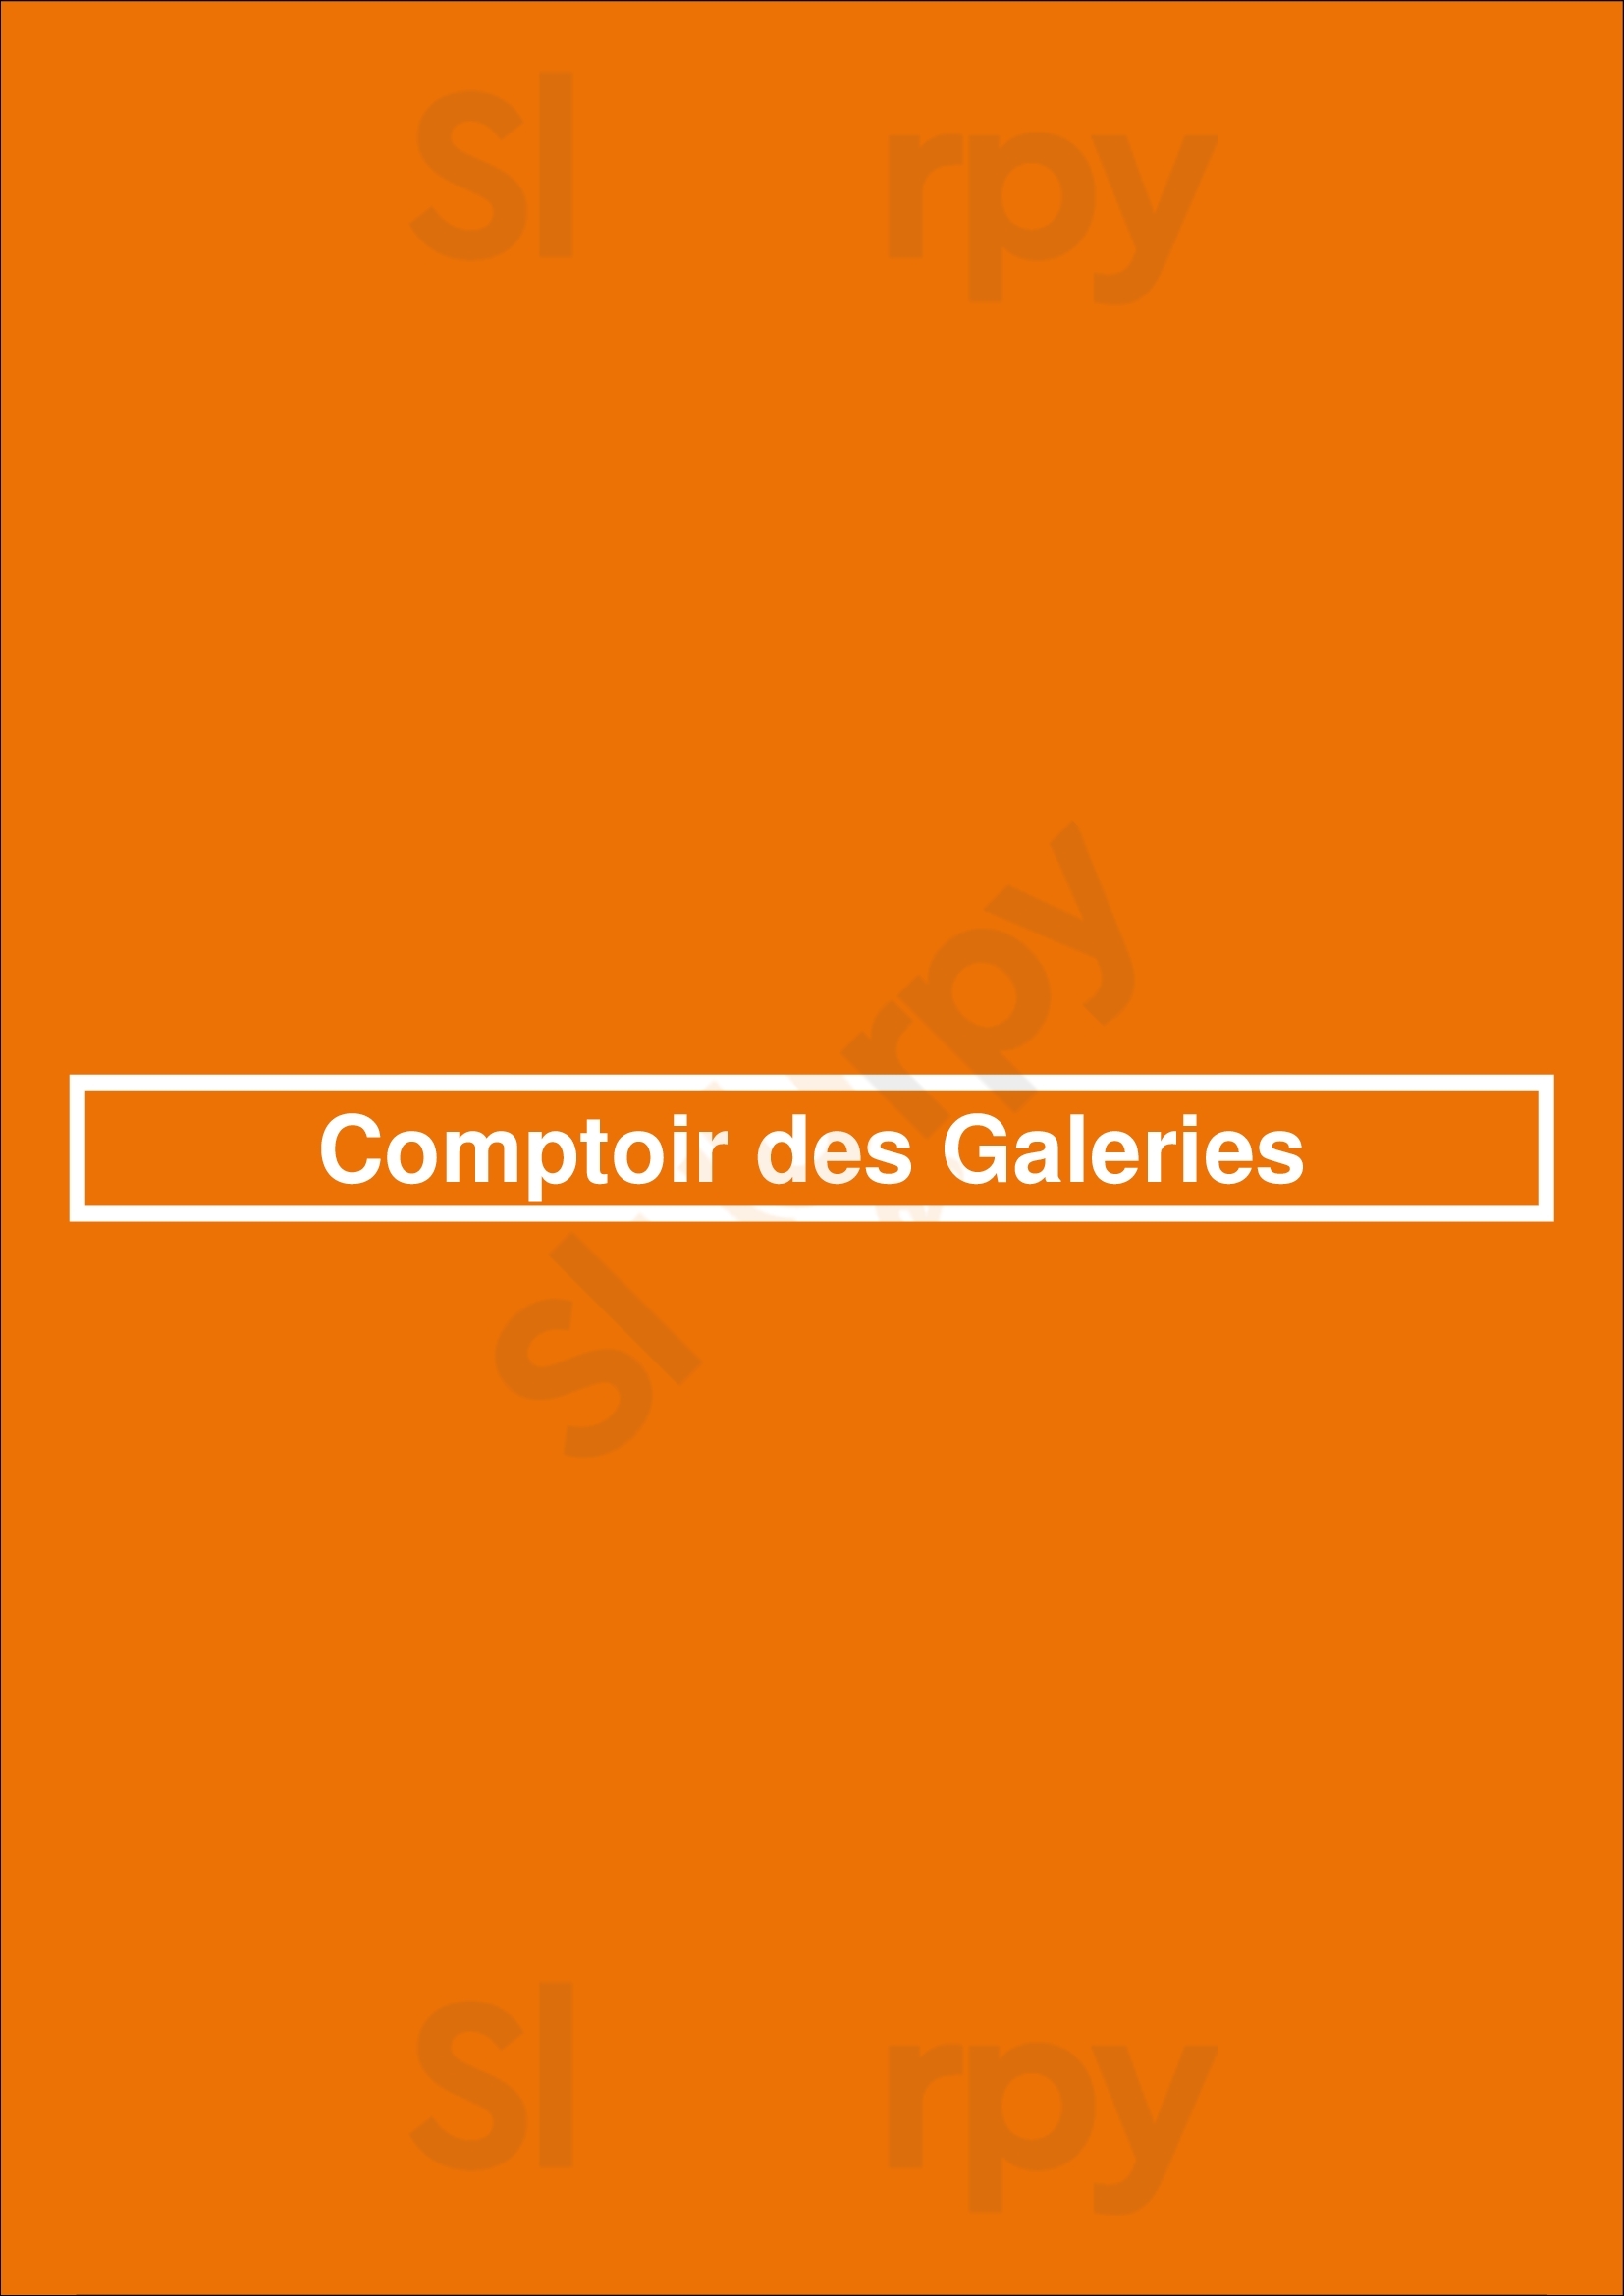 Comptoir Des Galeries Bruxelles Menu - 1